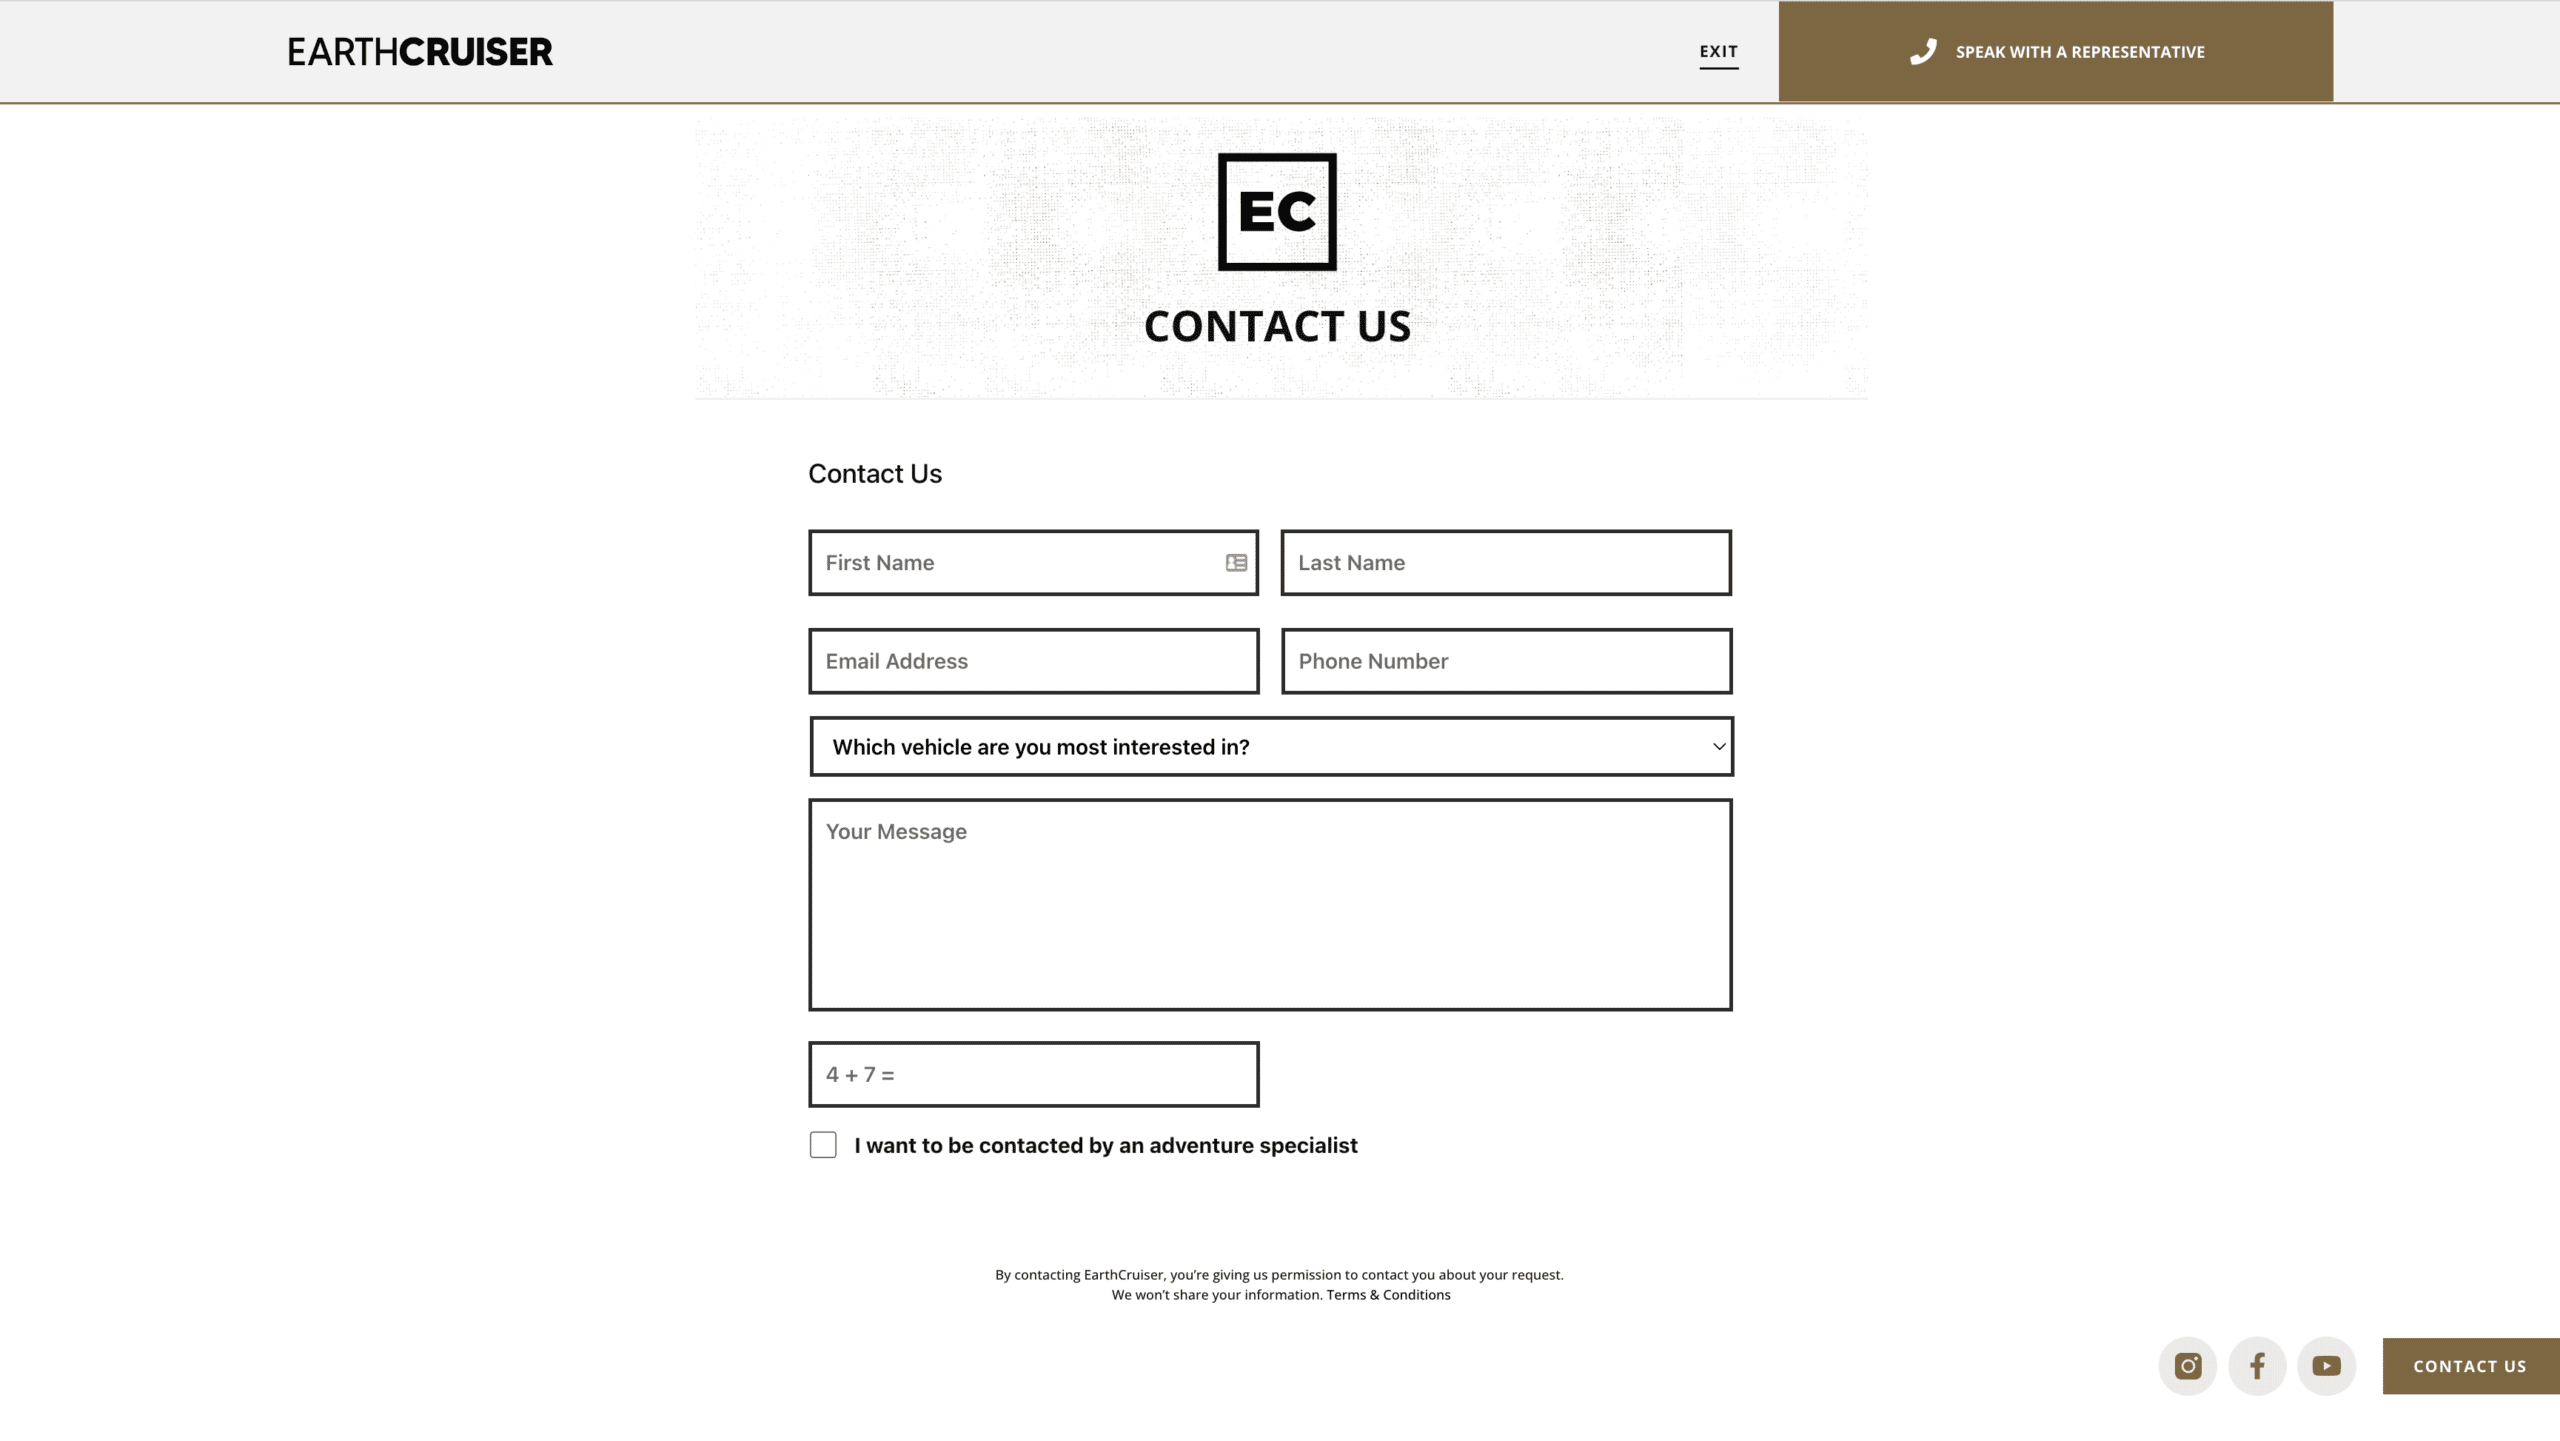 Earthcruiser contact form submit button